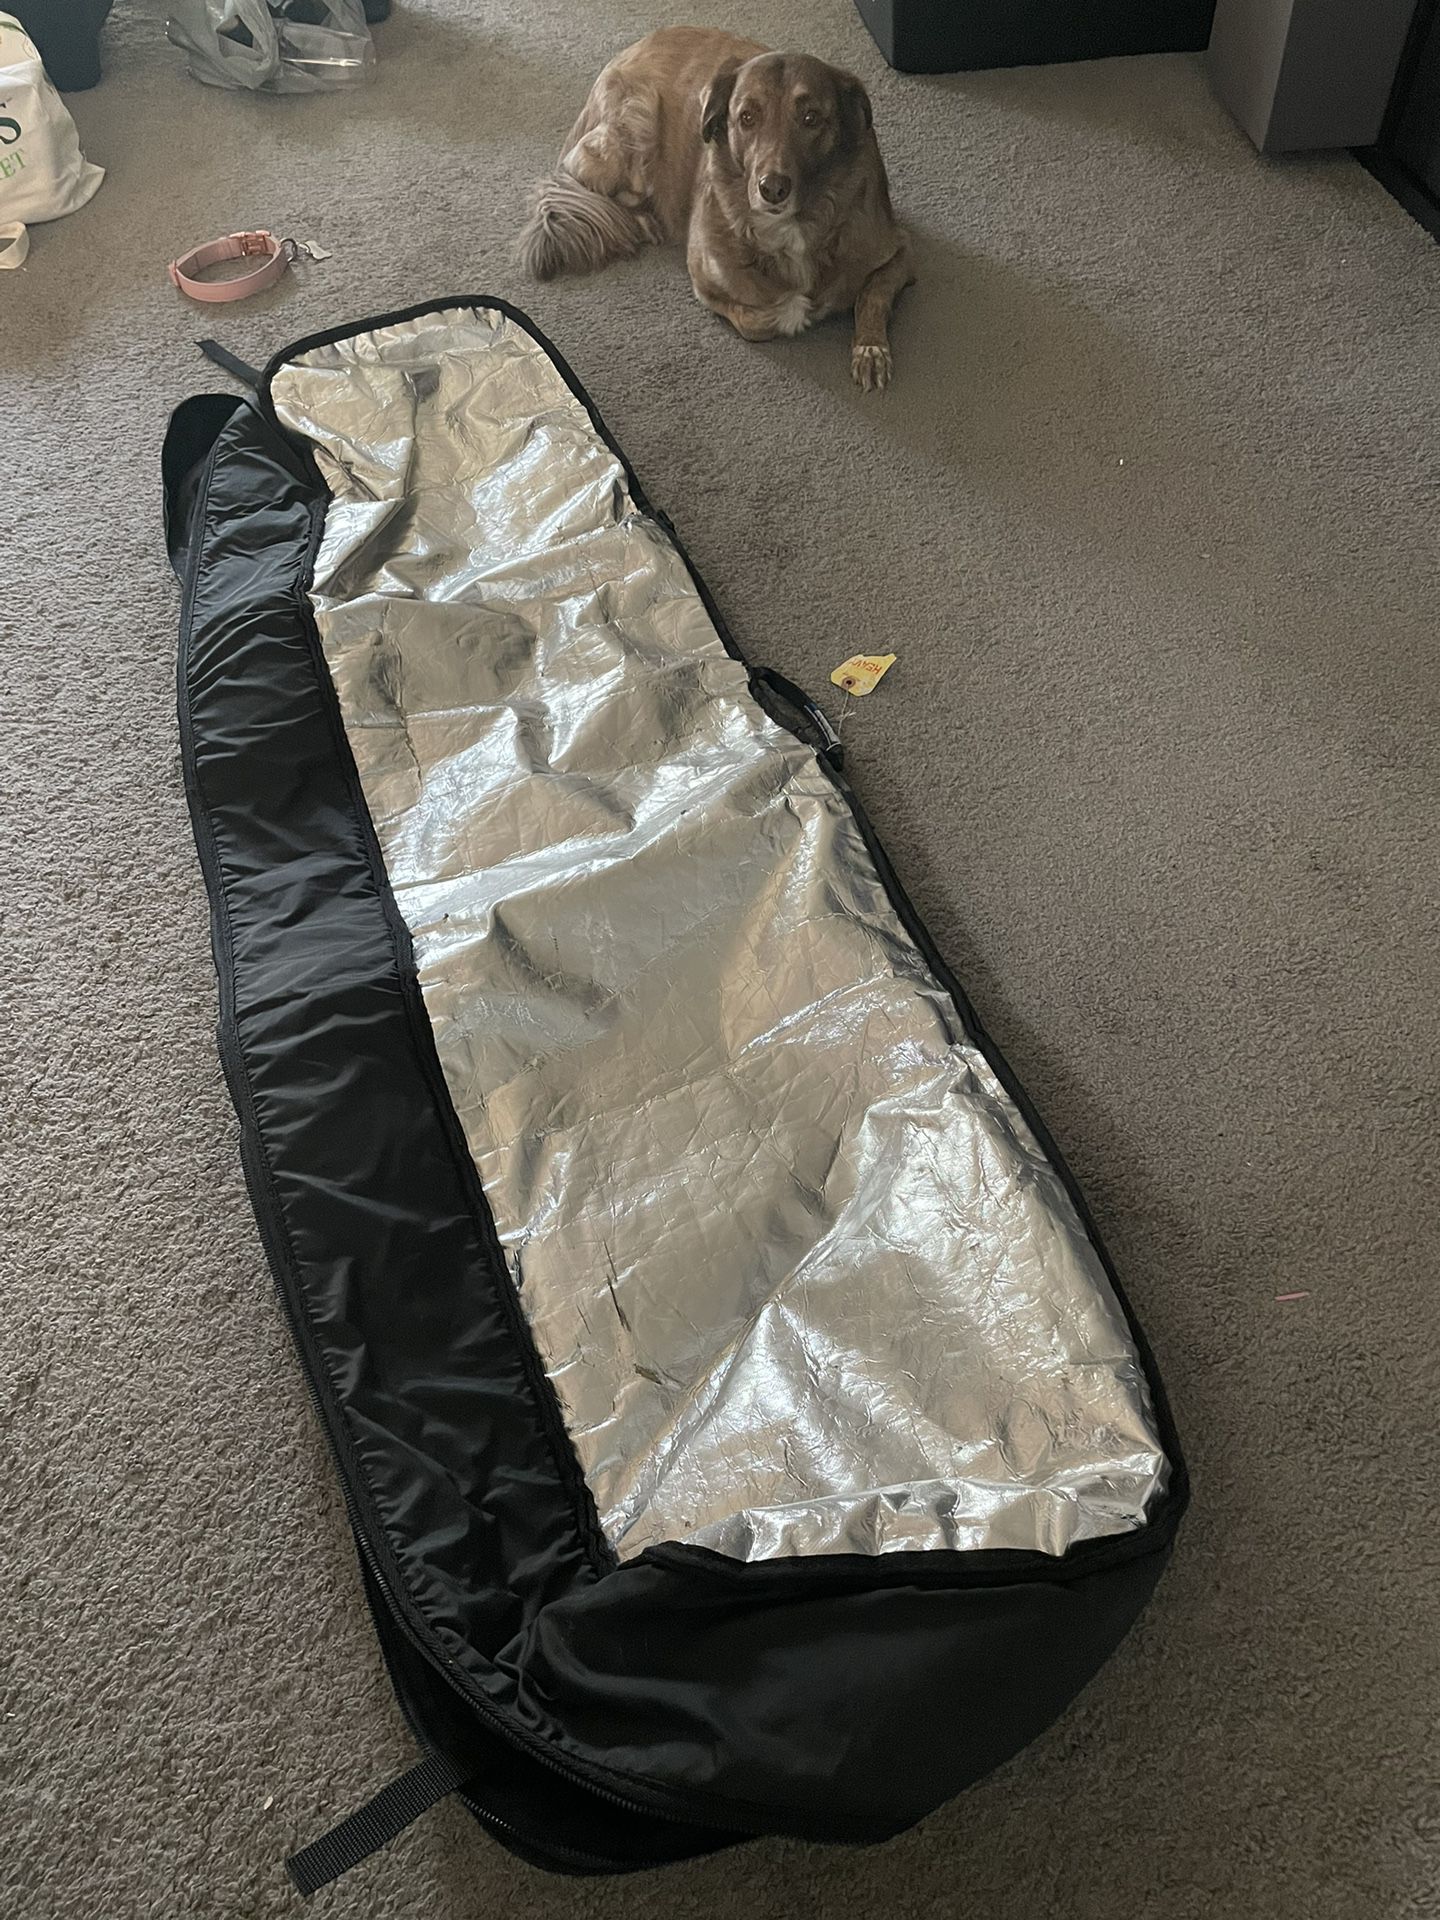 Snowboard Bag 